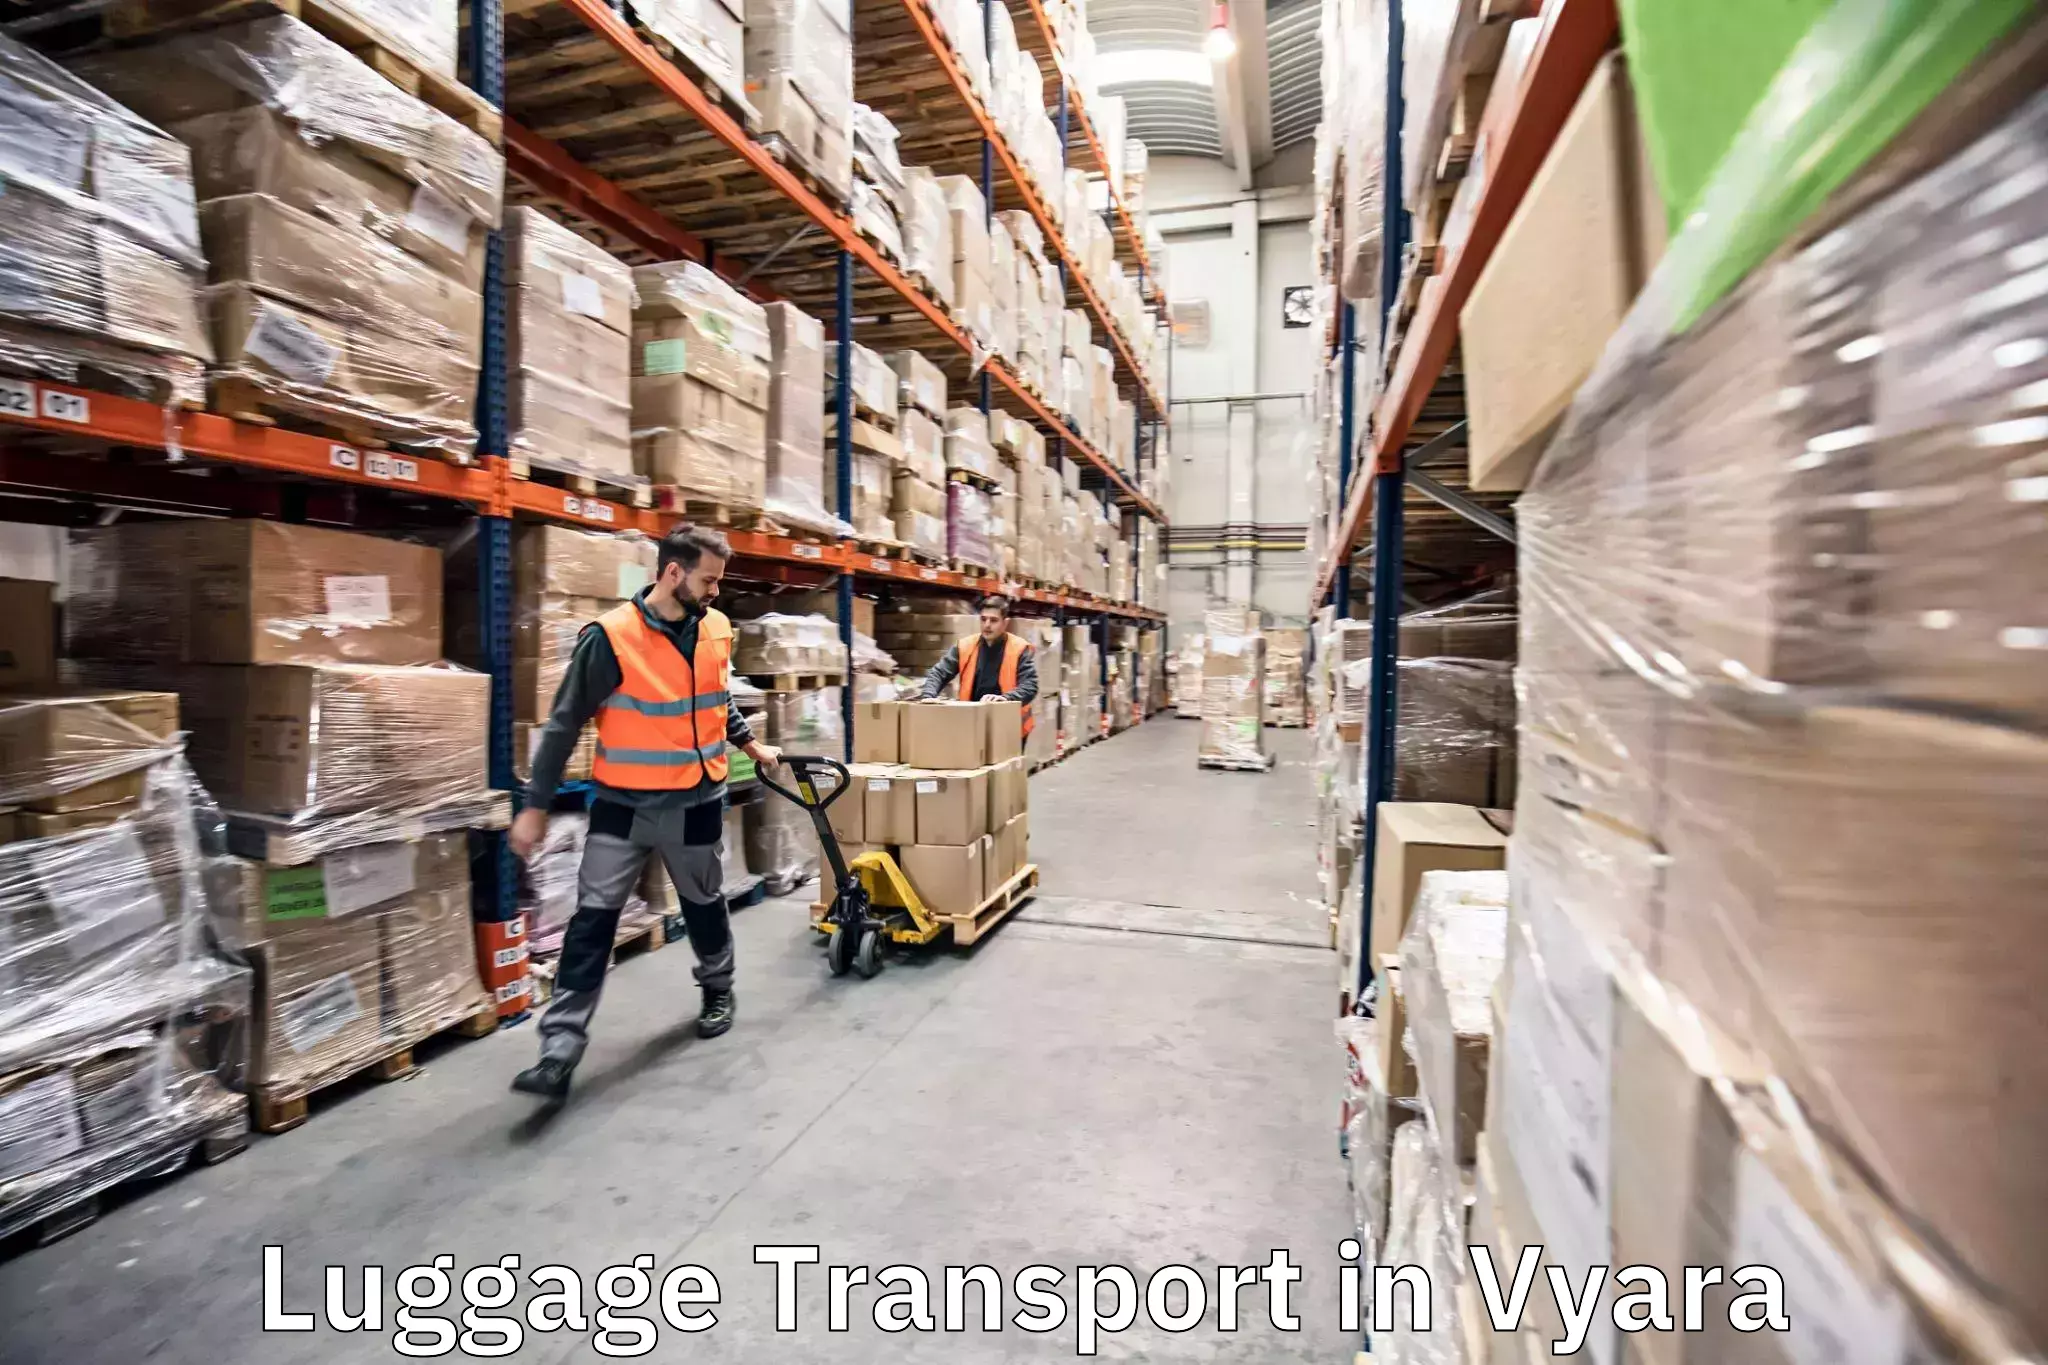 Luggage transport tips in Vyara